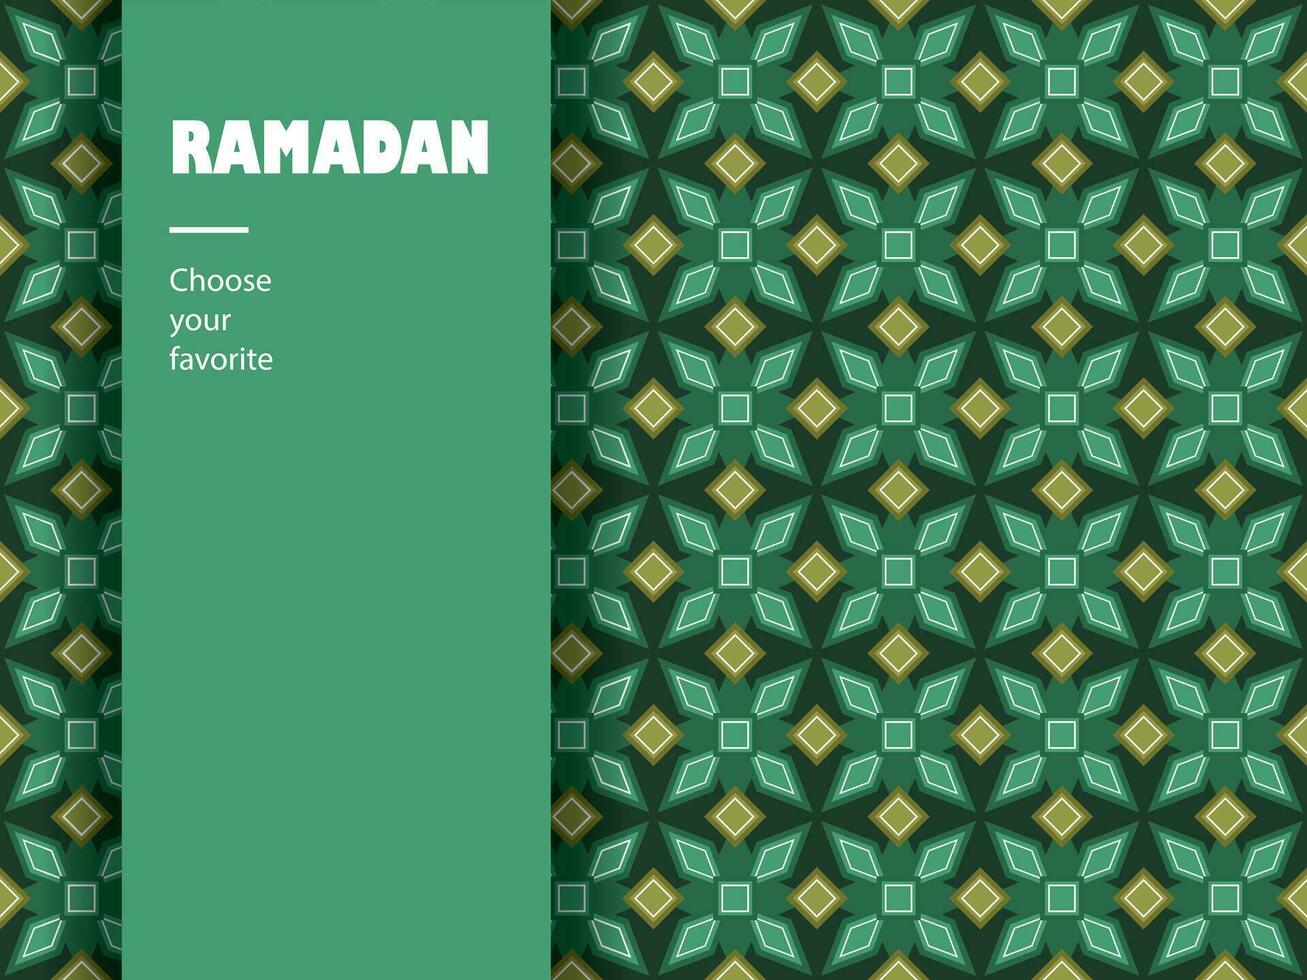 árabe padronizar islâmico Ramadã papel de parede desatado vetor fundo ornamental